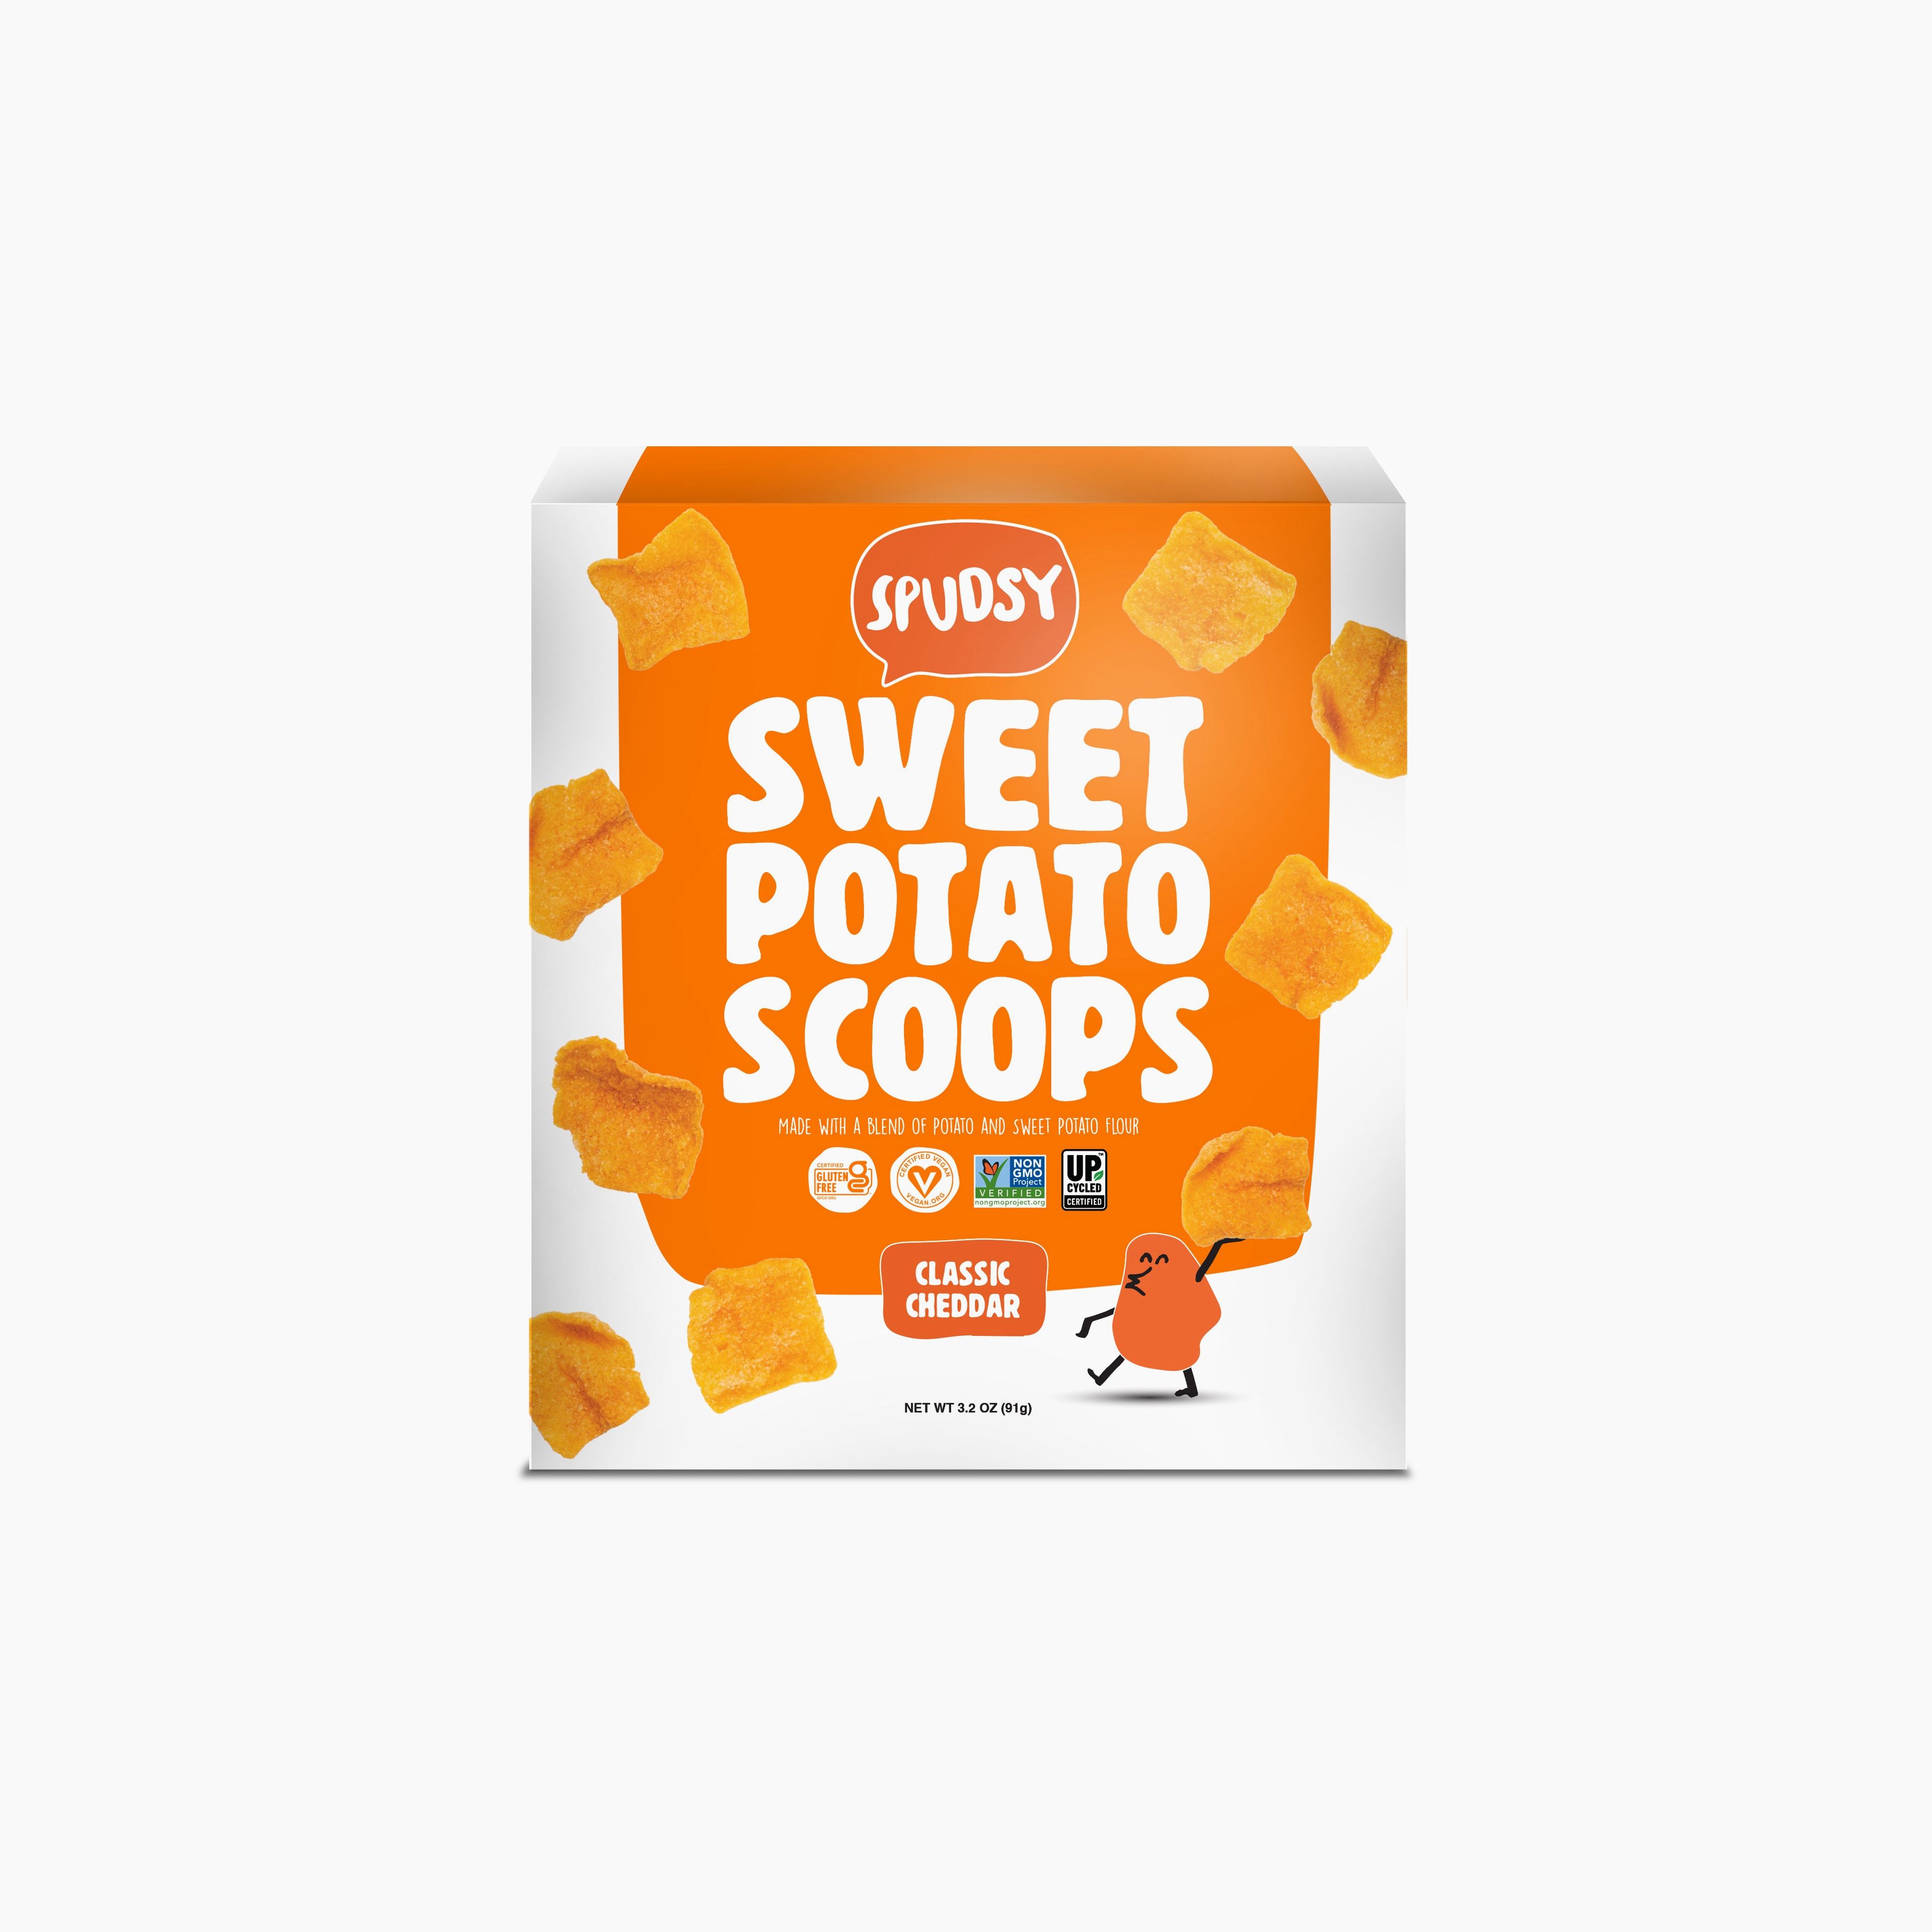 Classic Cheddar Sweet Potato Scoop